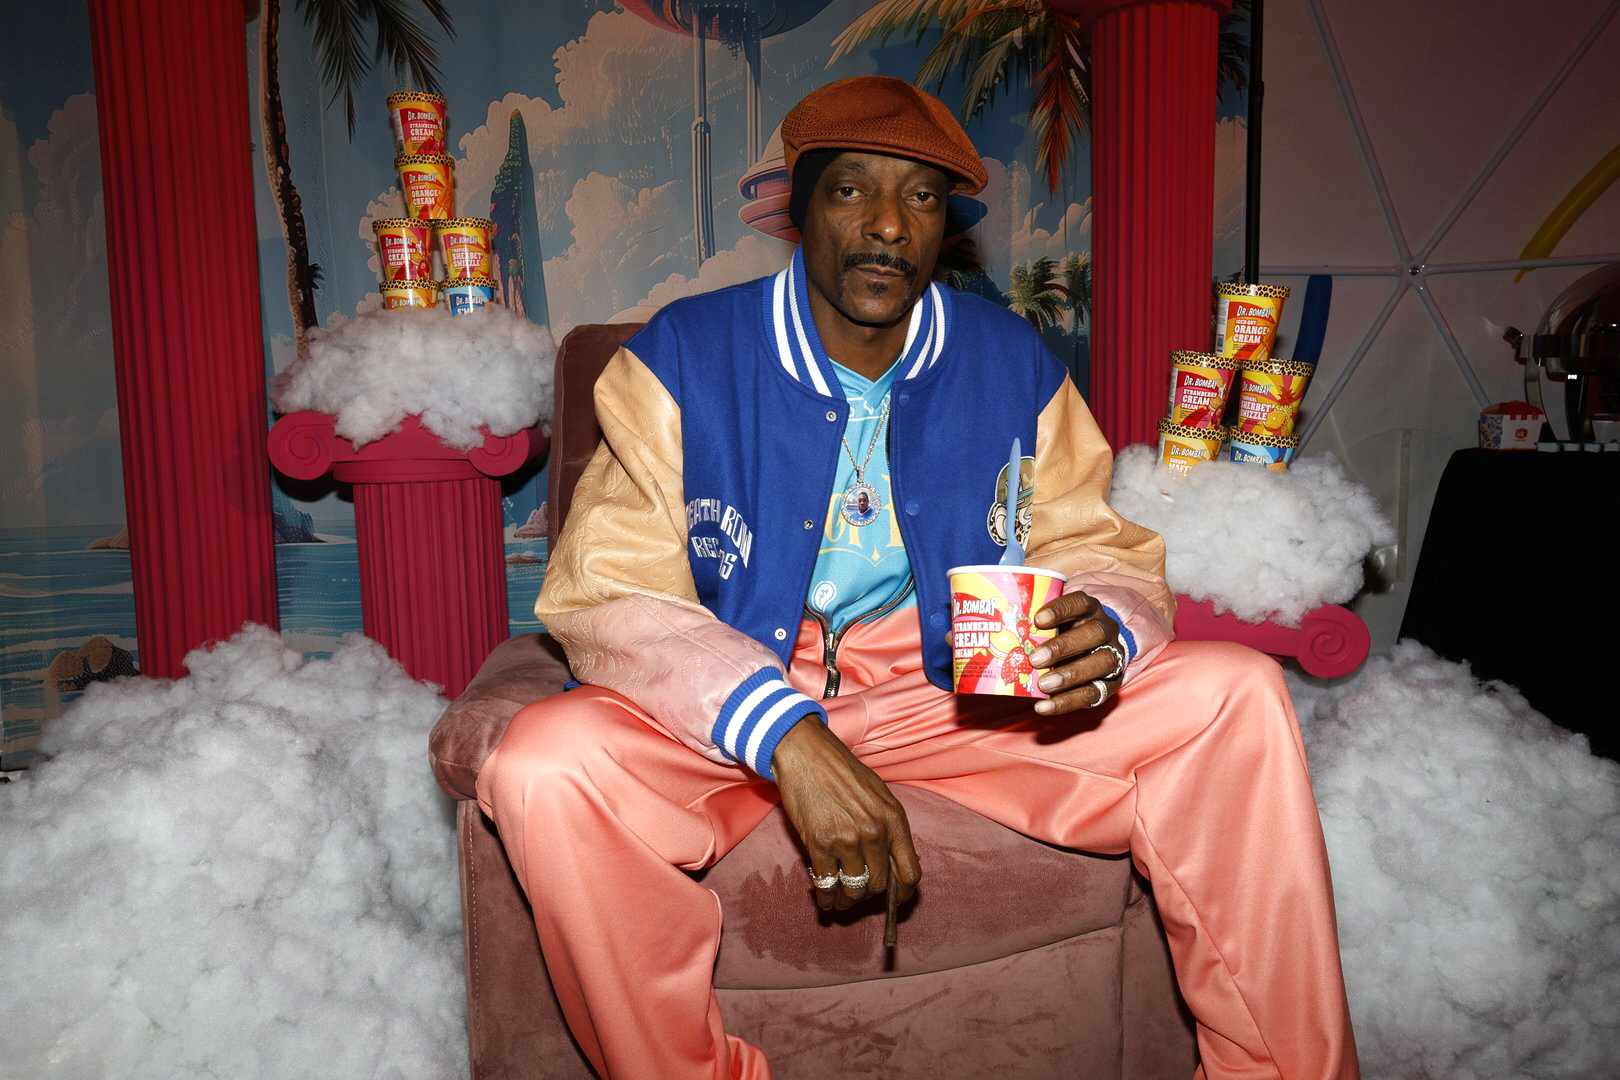 Snoop Dogg’s Strawberry Cream Dream Ice Cream Flavor Is Here, and It’s Legit